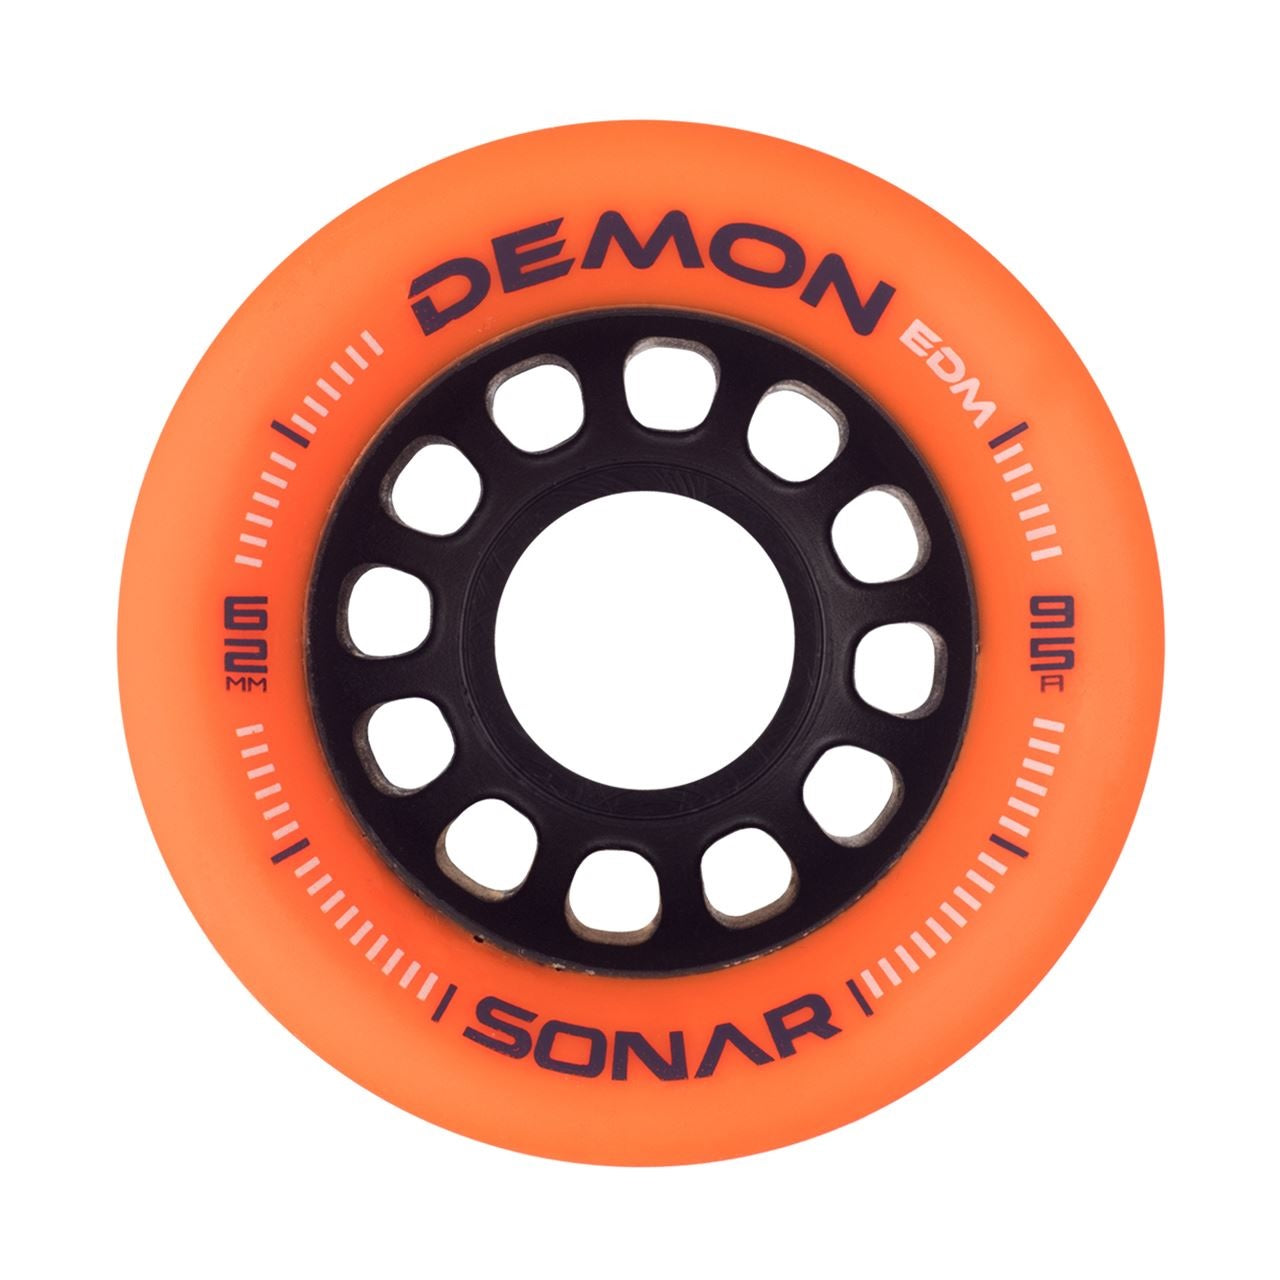 Ruedas para patines Sonar Demon EDM naranja 62 mm 95a - Juego de 4